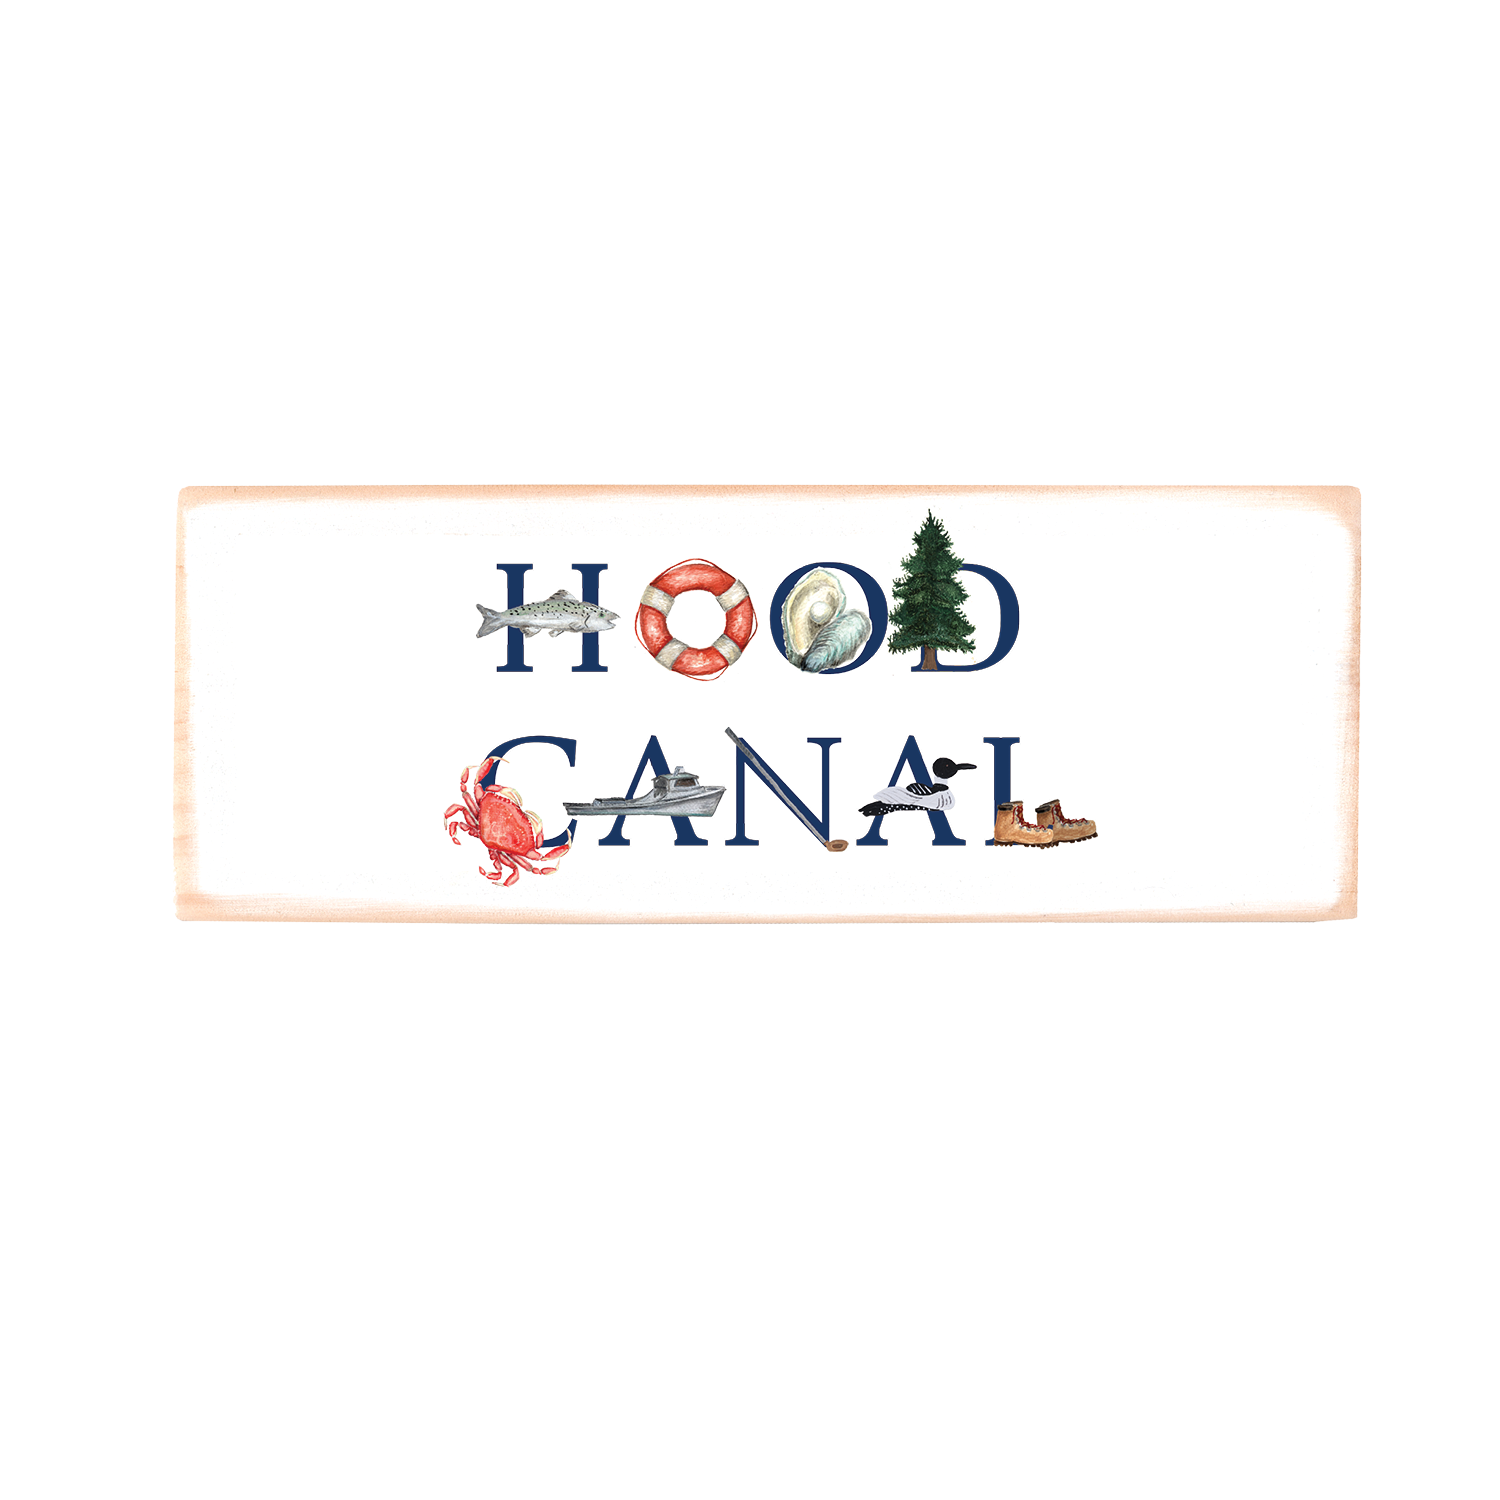 hood canal rectangle wood block